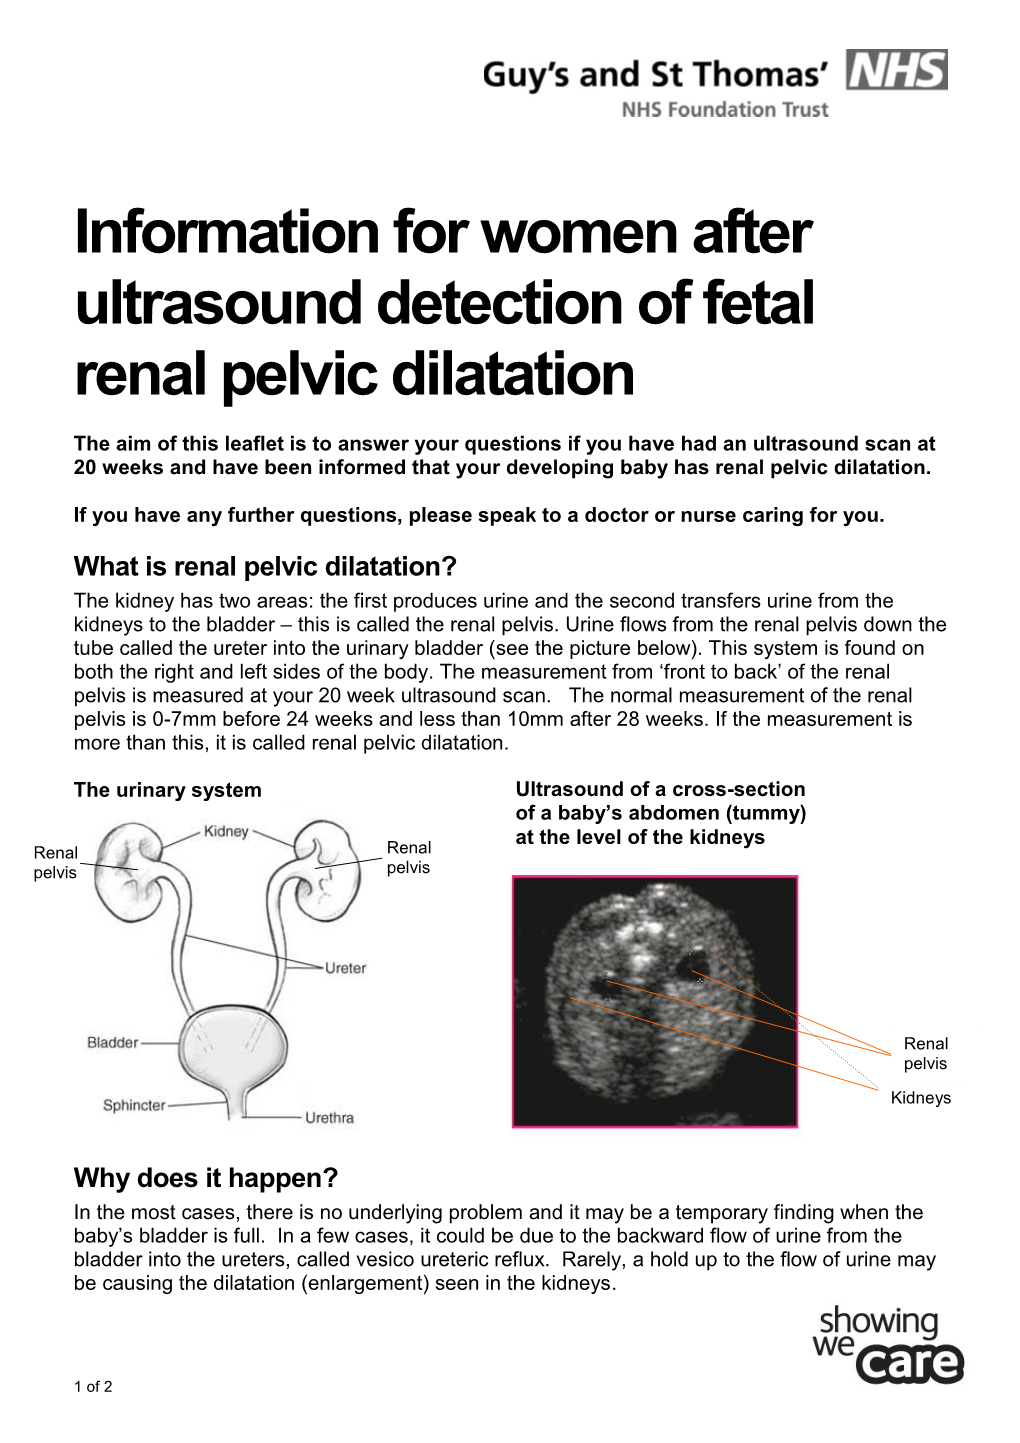 Information for Women After Ultrasound Detection of Fetal Renal Pelvic